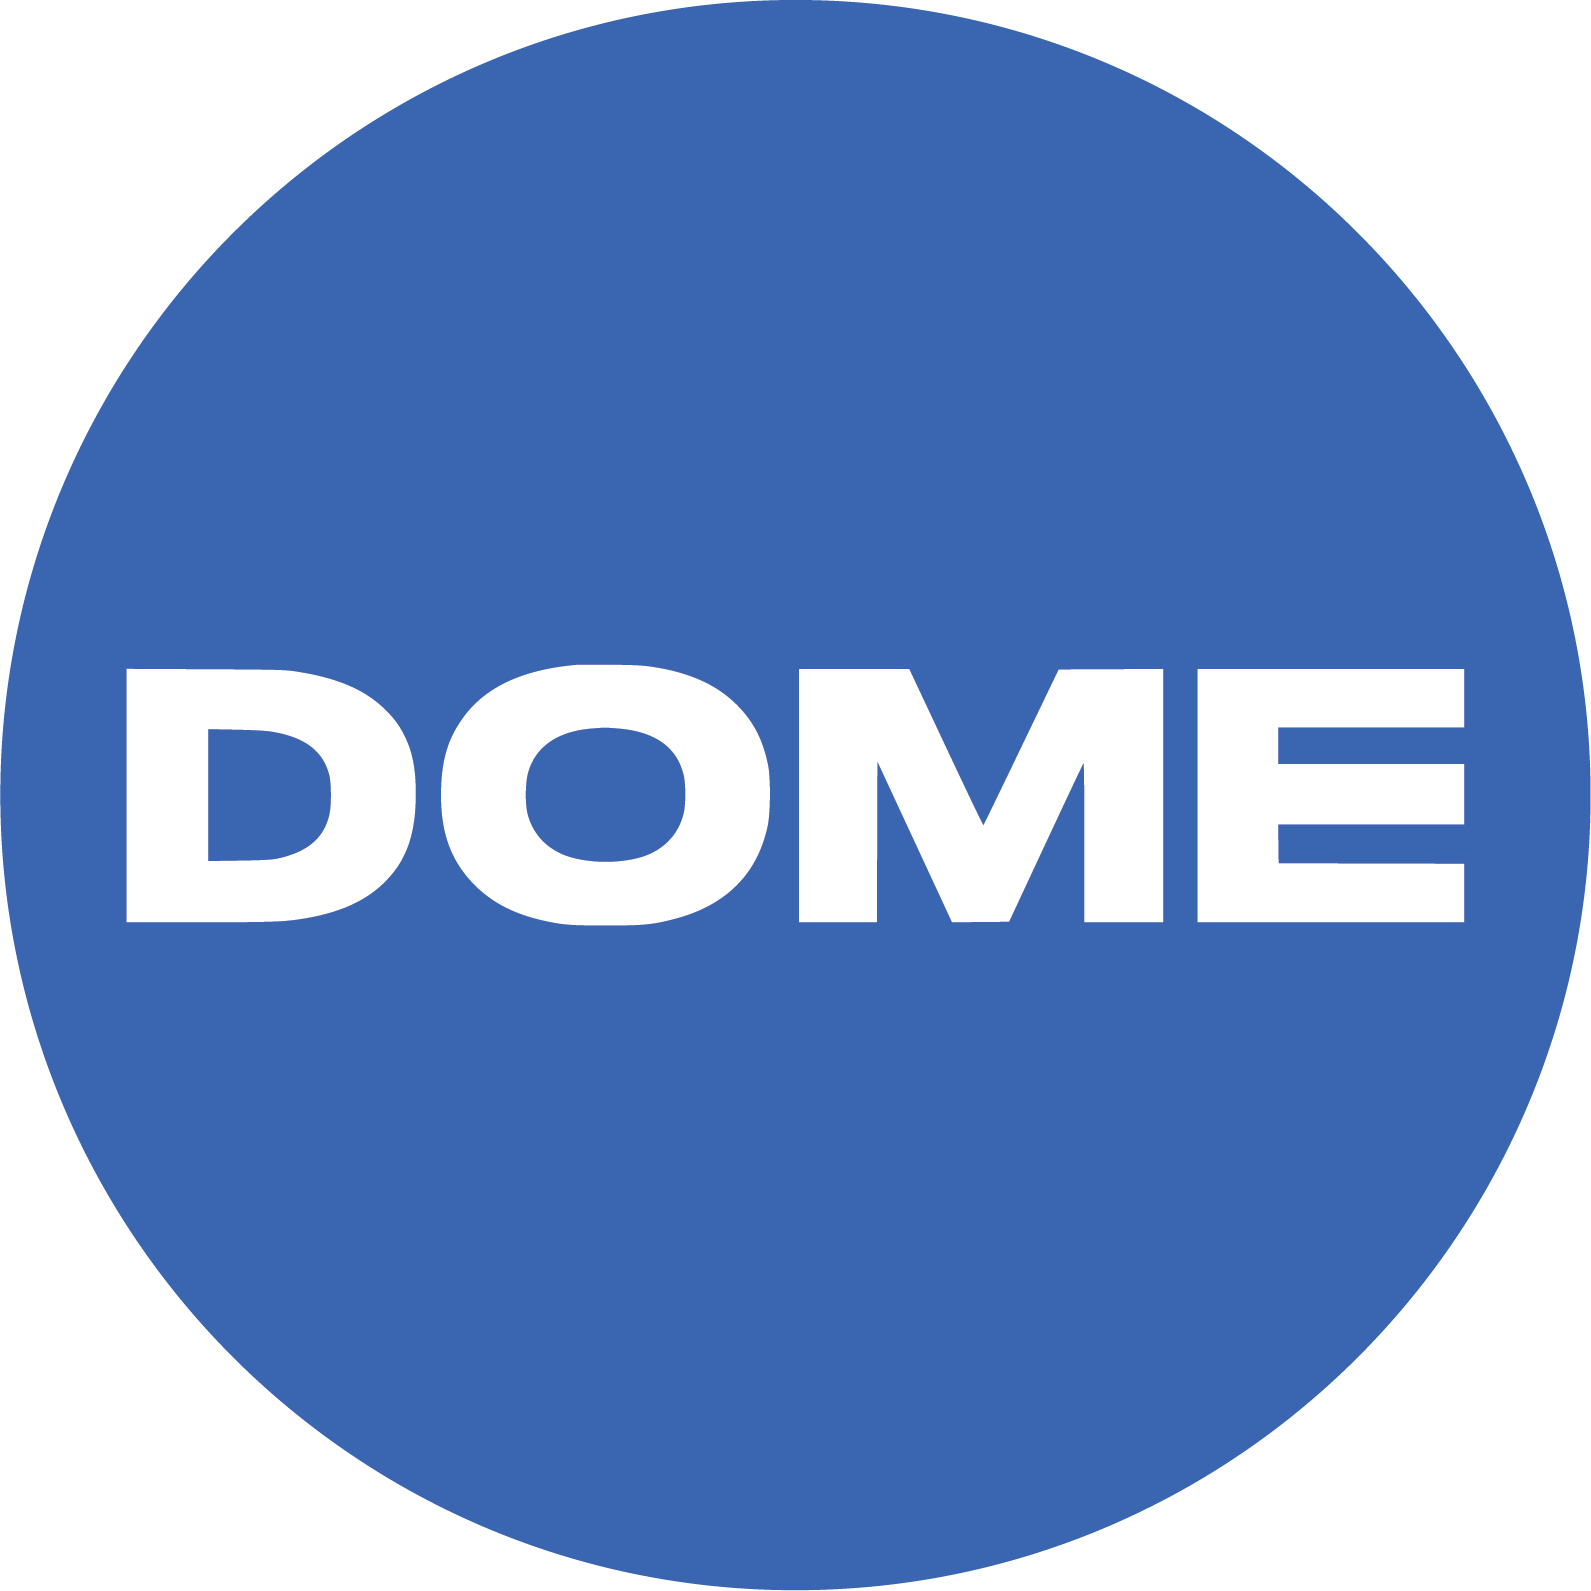 Dome SaaS Validation Template logo